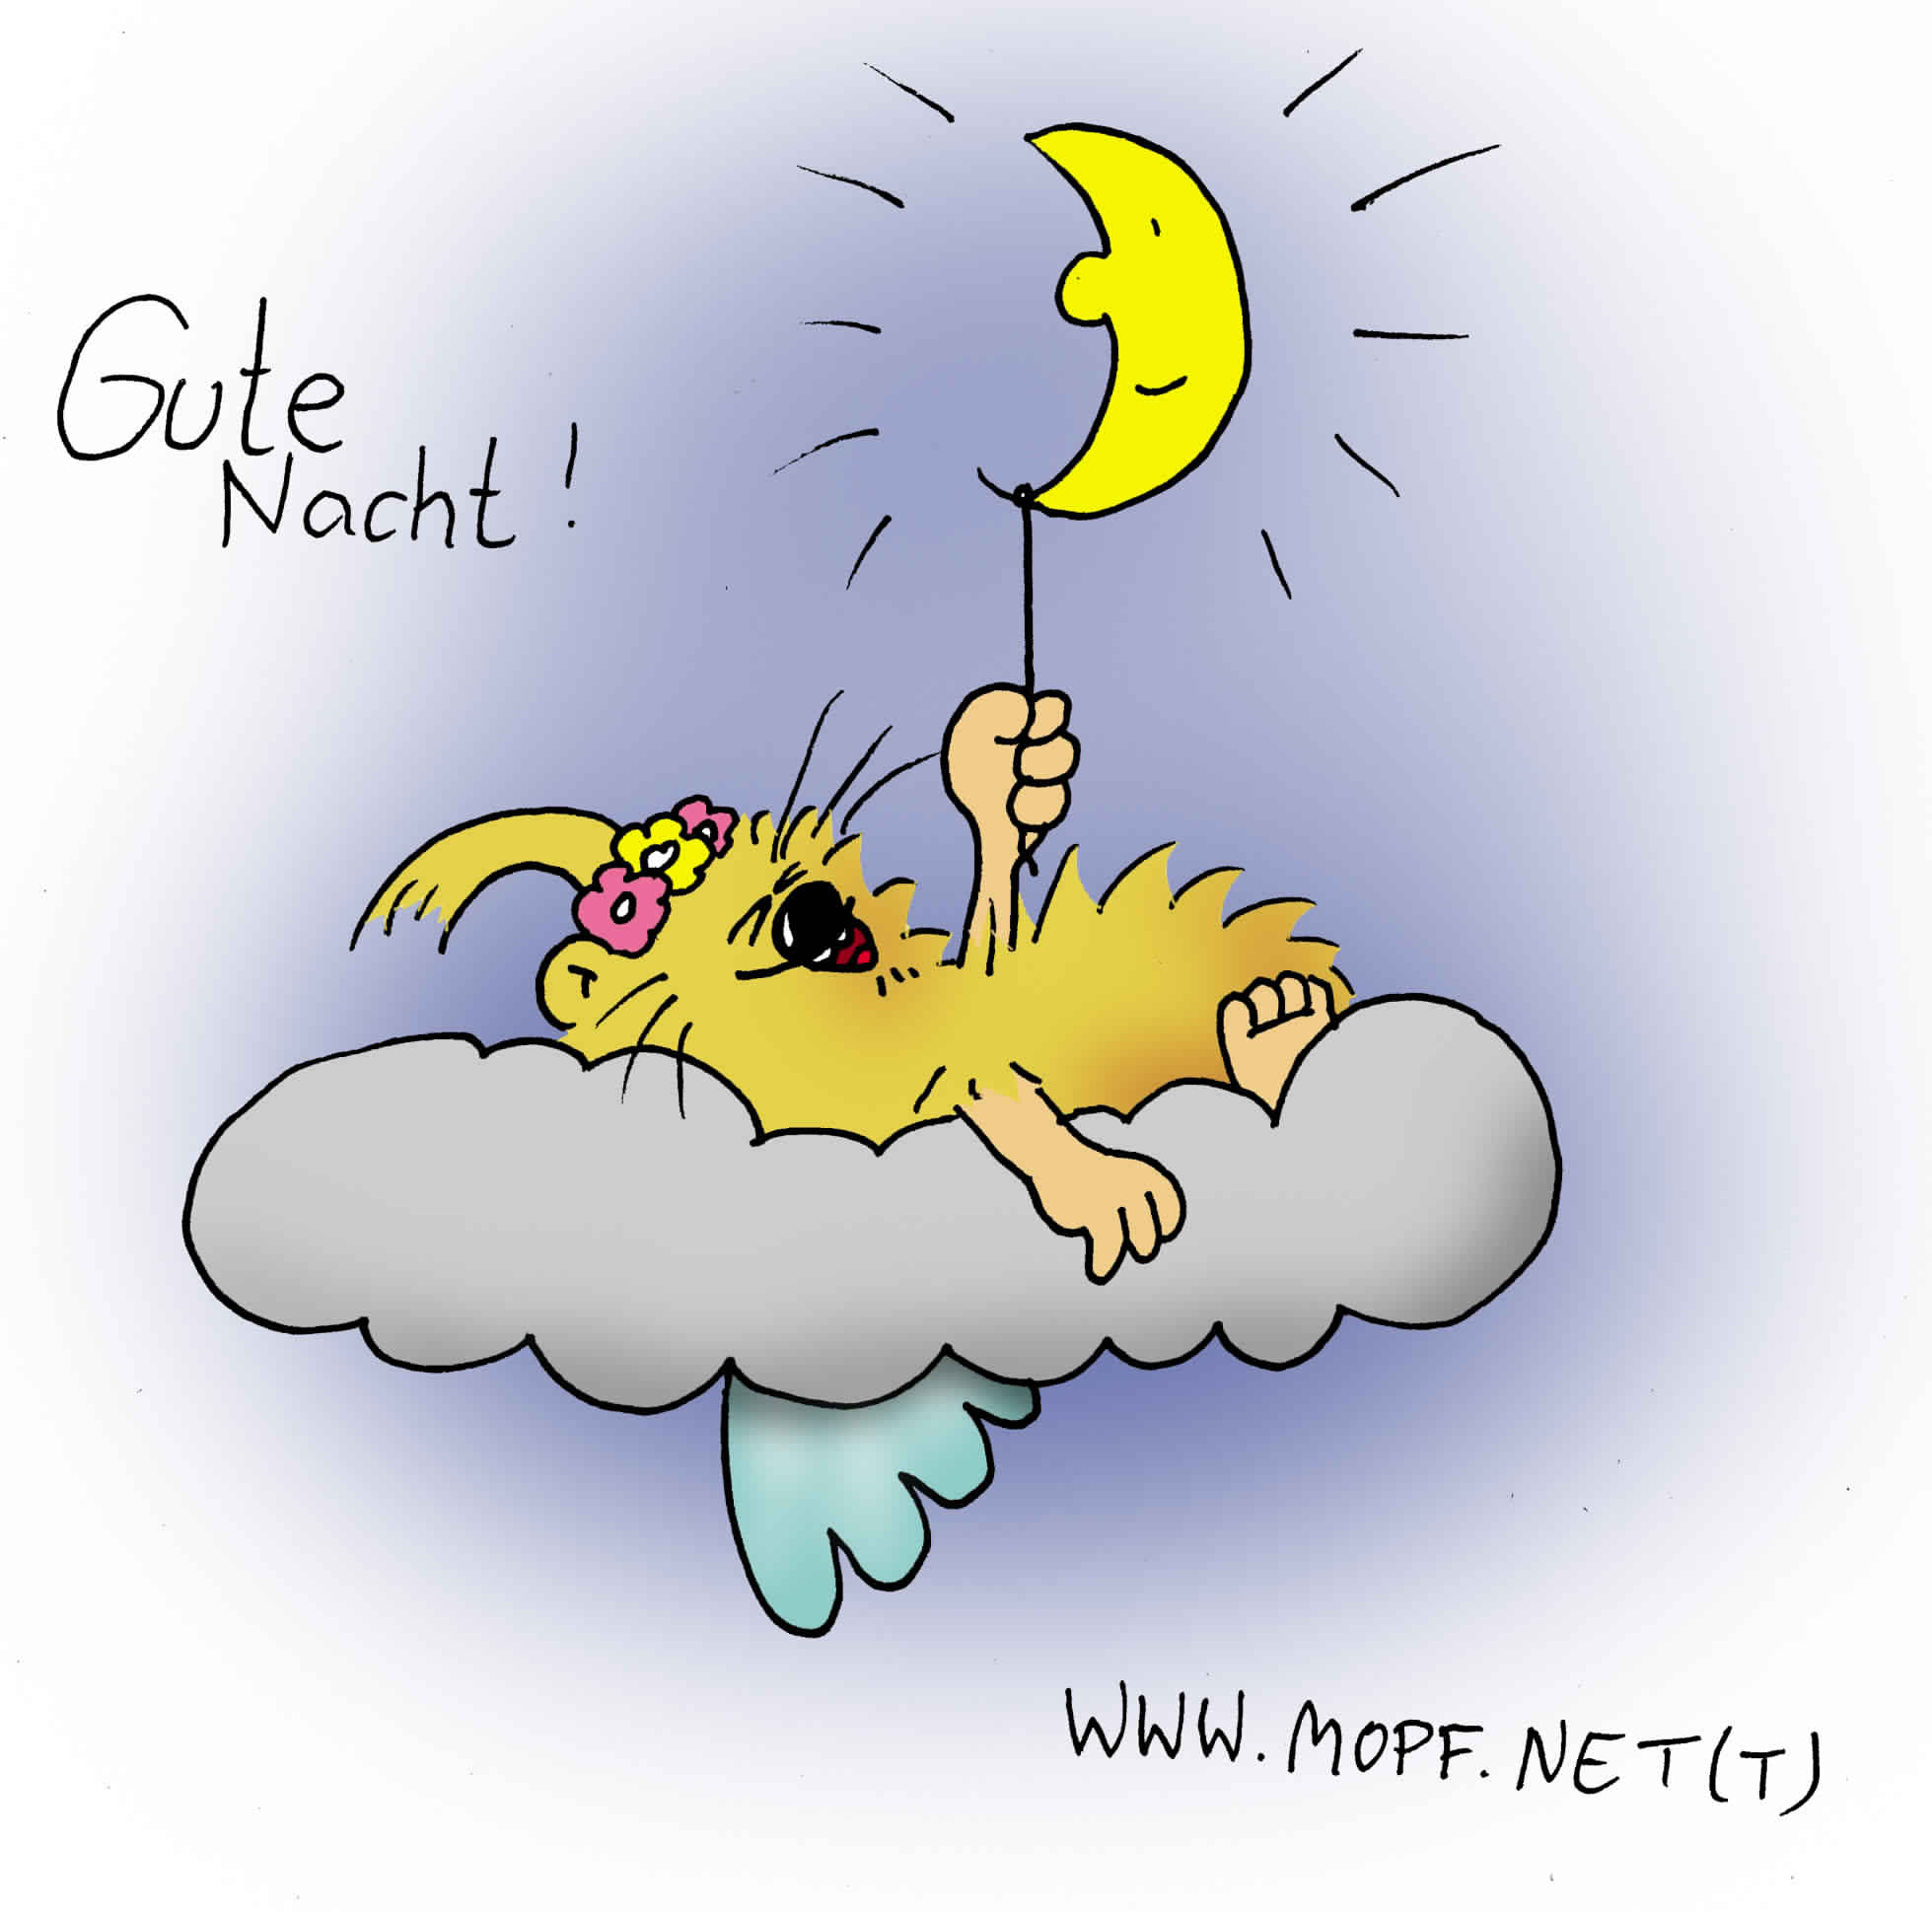 4 - Gute nacht cartoon